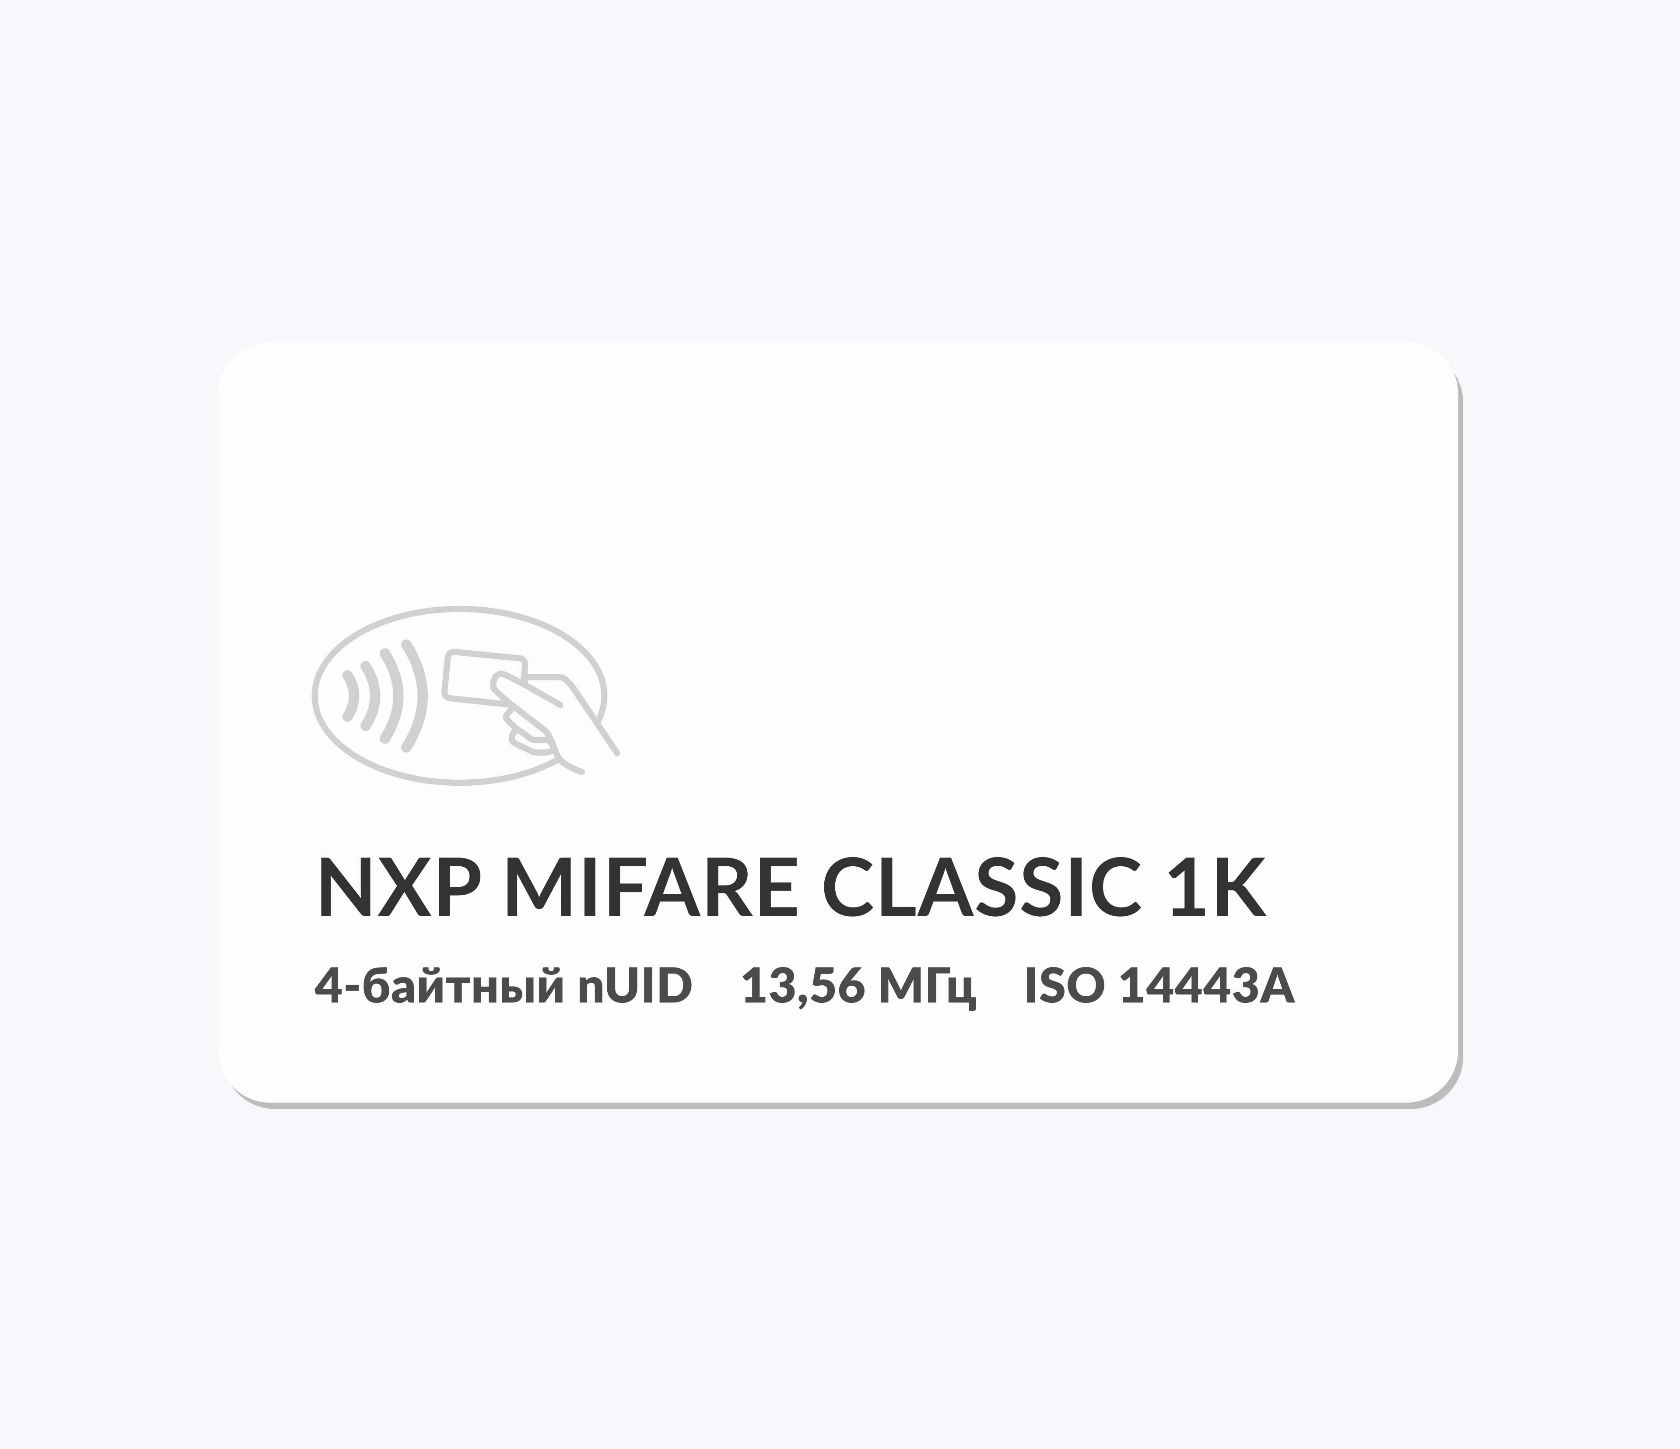 RFID-карты с чипом NXP MIFARE Classic 1k 4 byte nUID